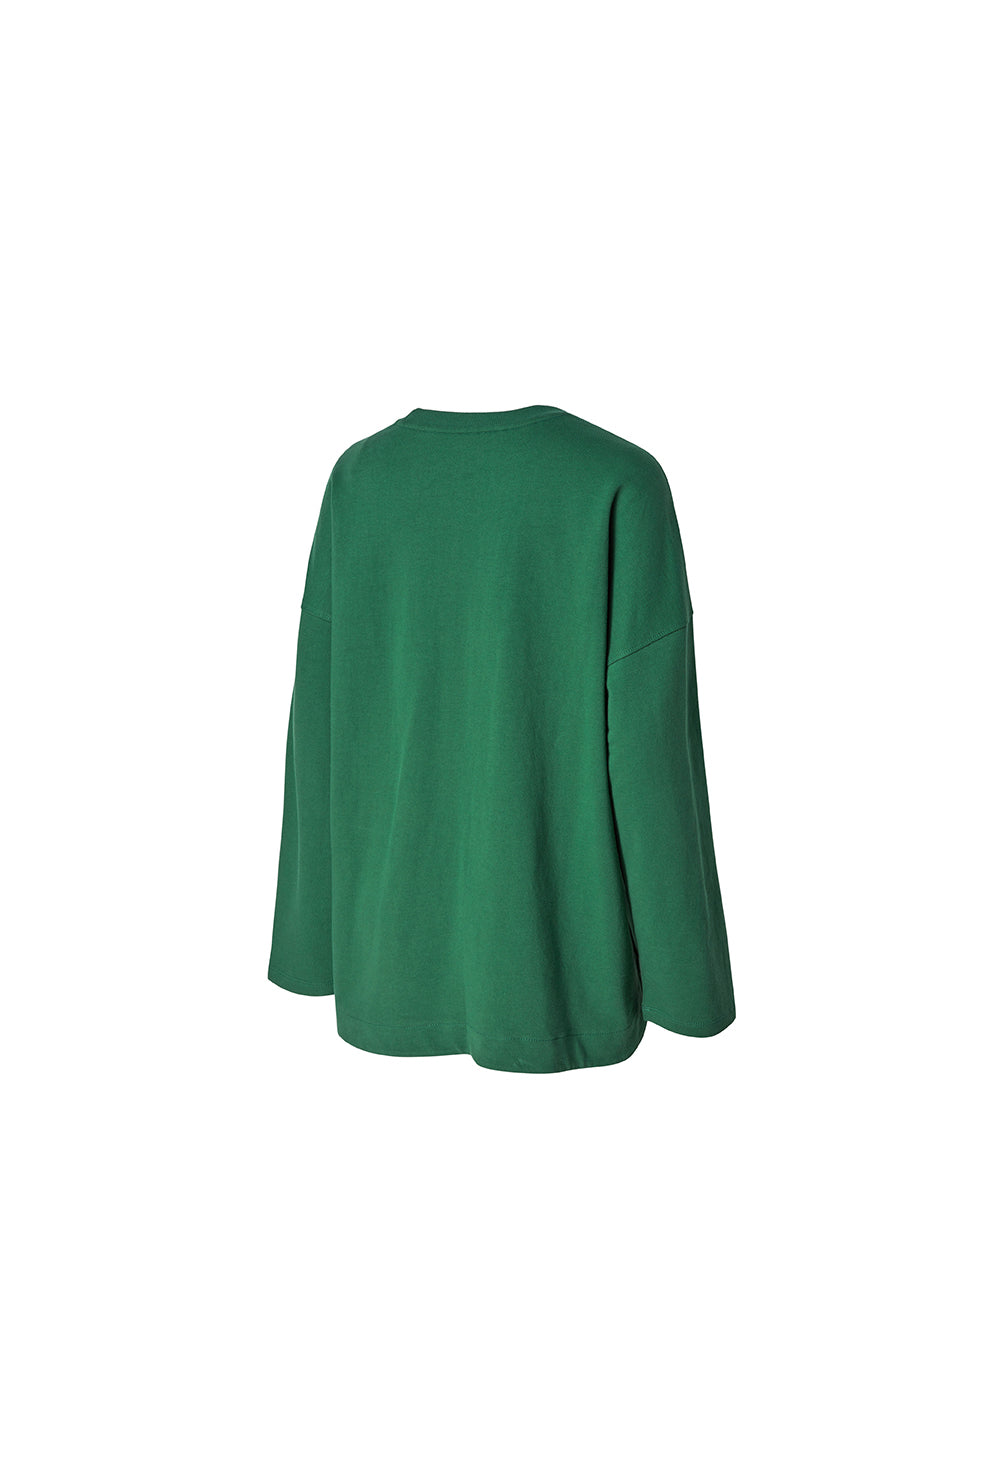 Cotton Cover Loose Fit T-Shirt - Tiller Green